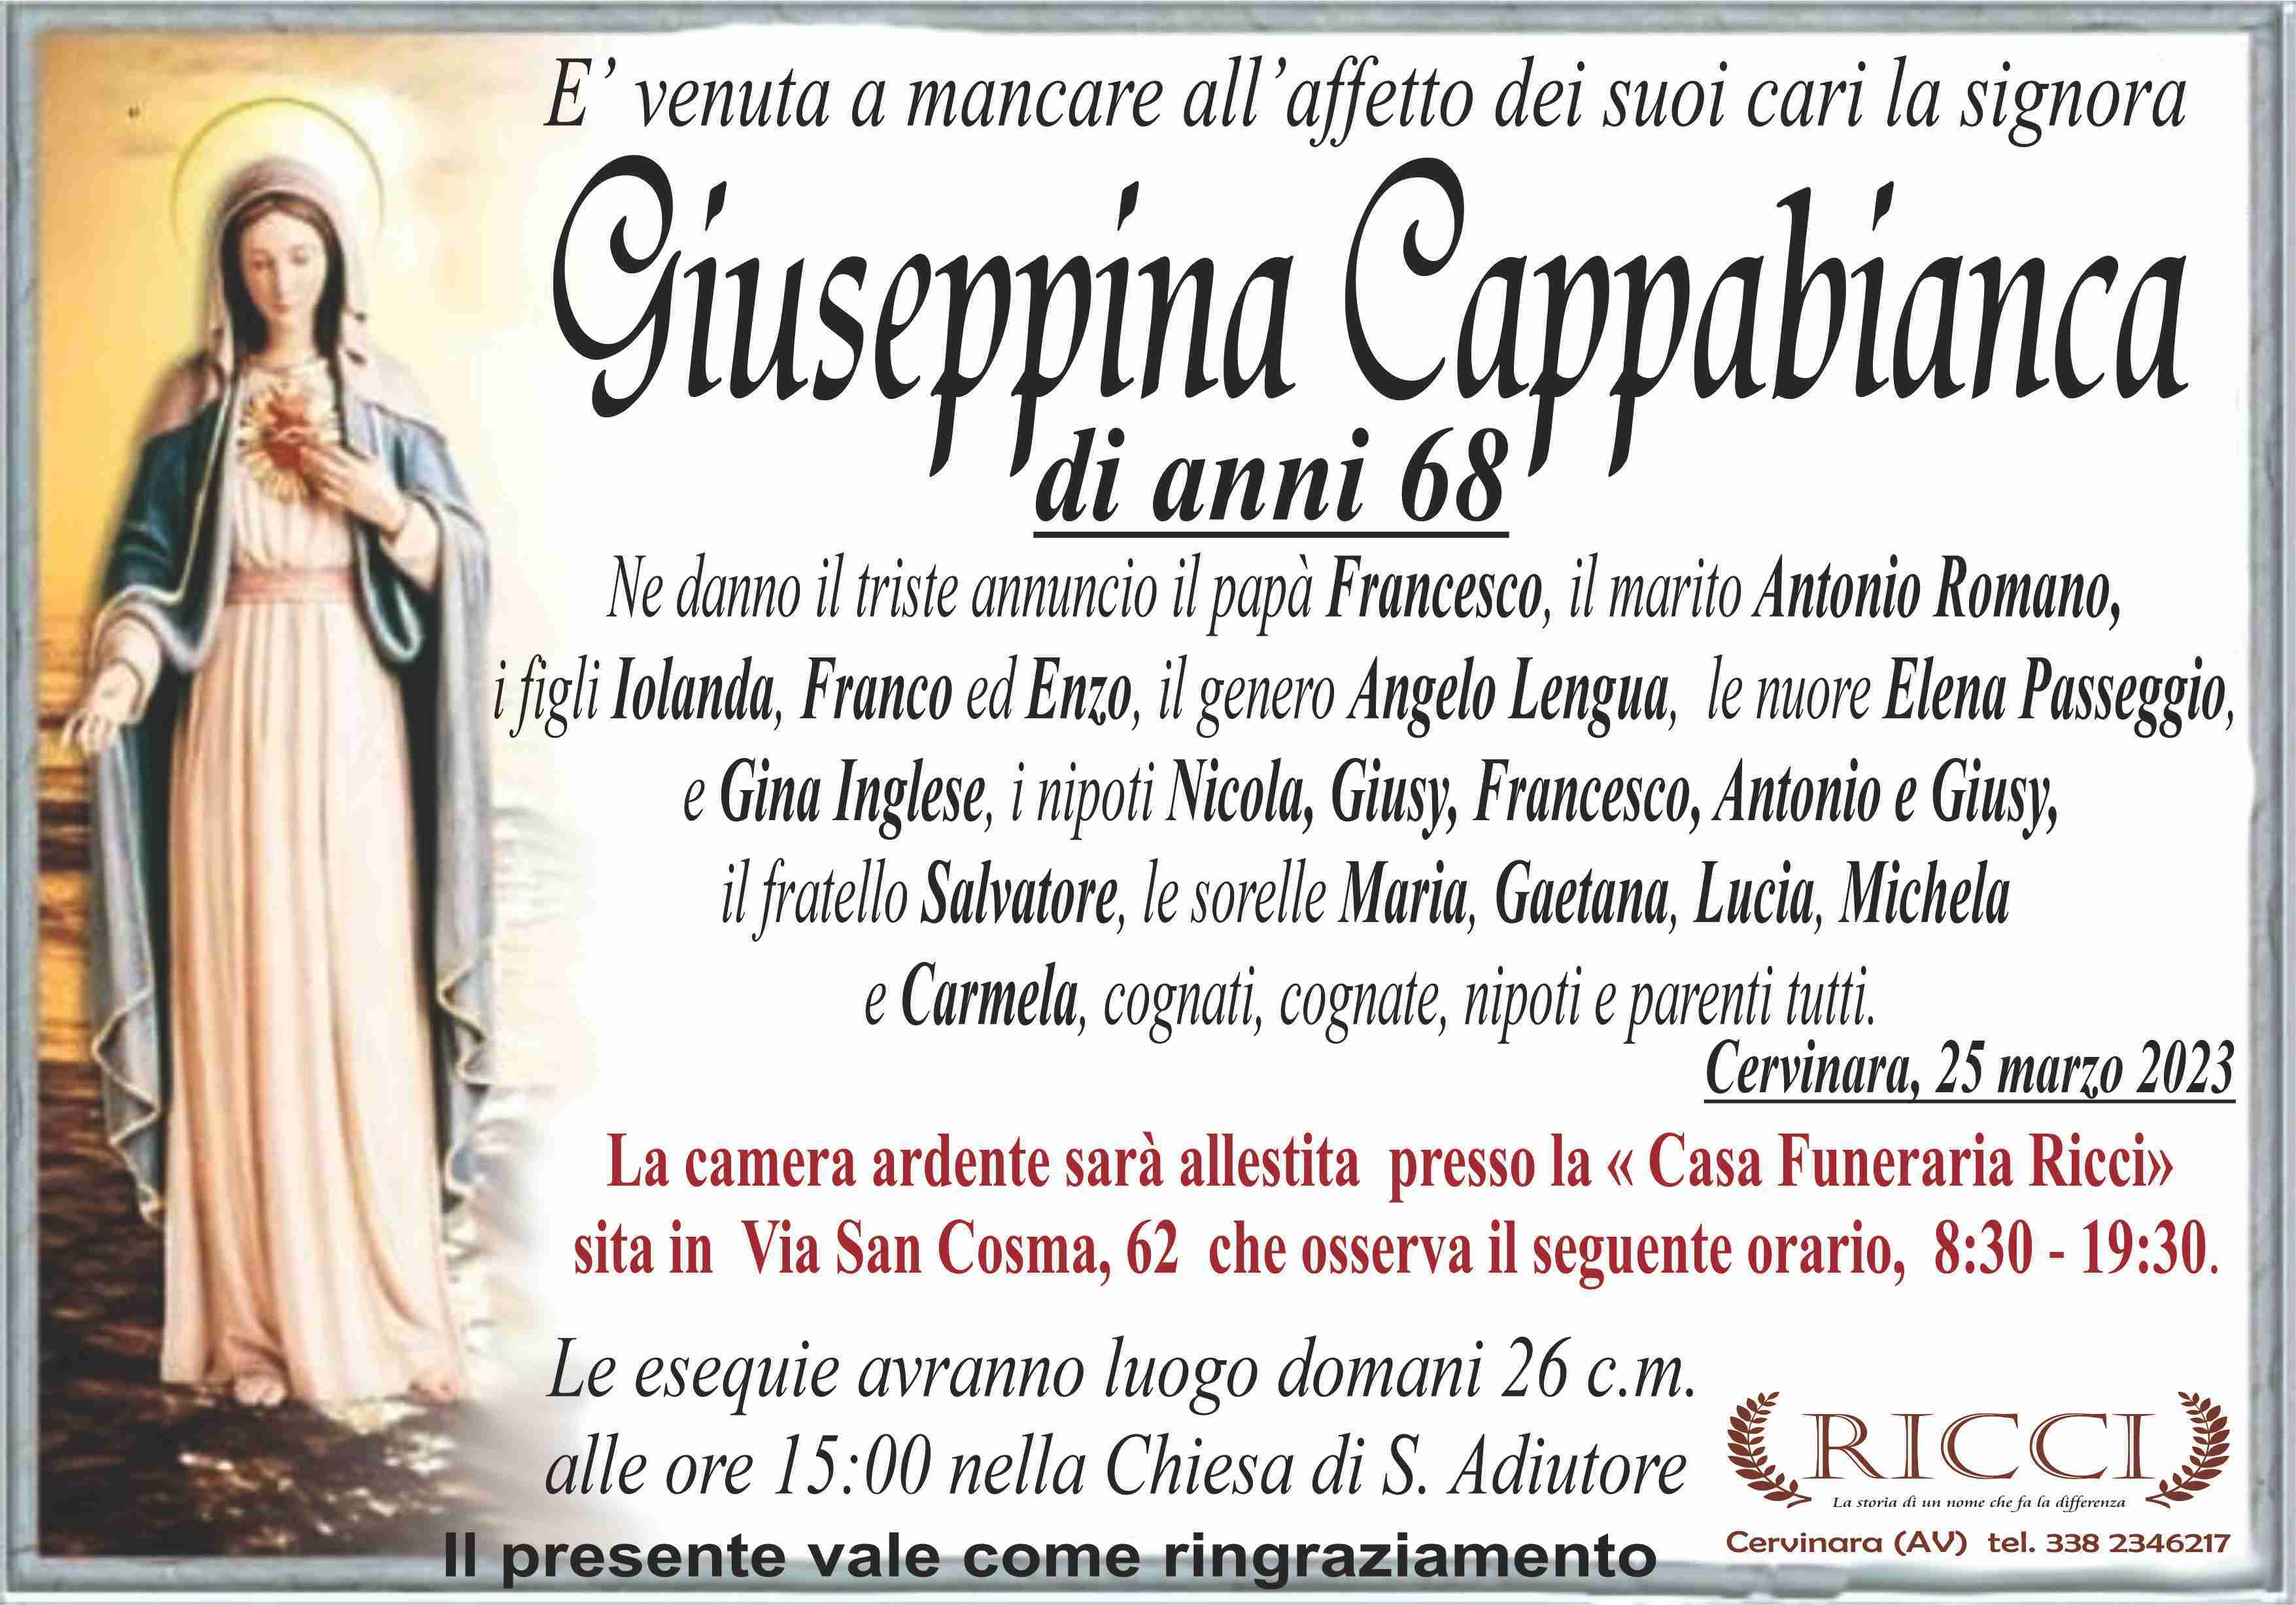 Giuseppina Cappabianca